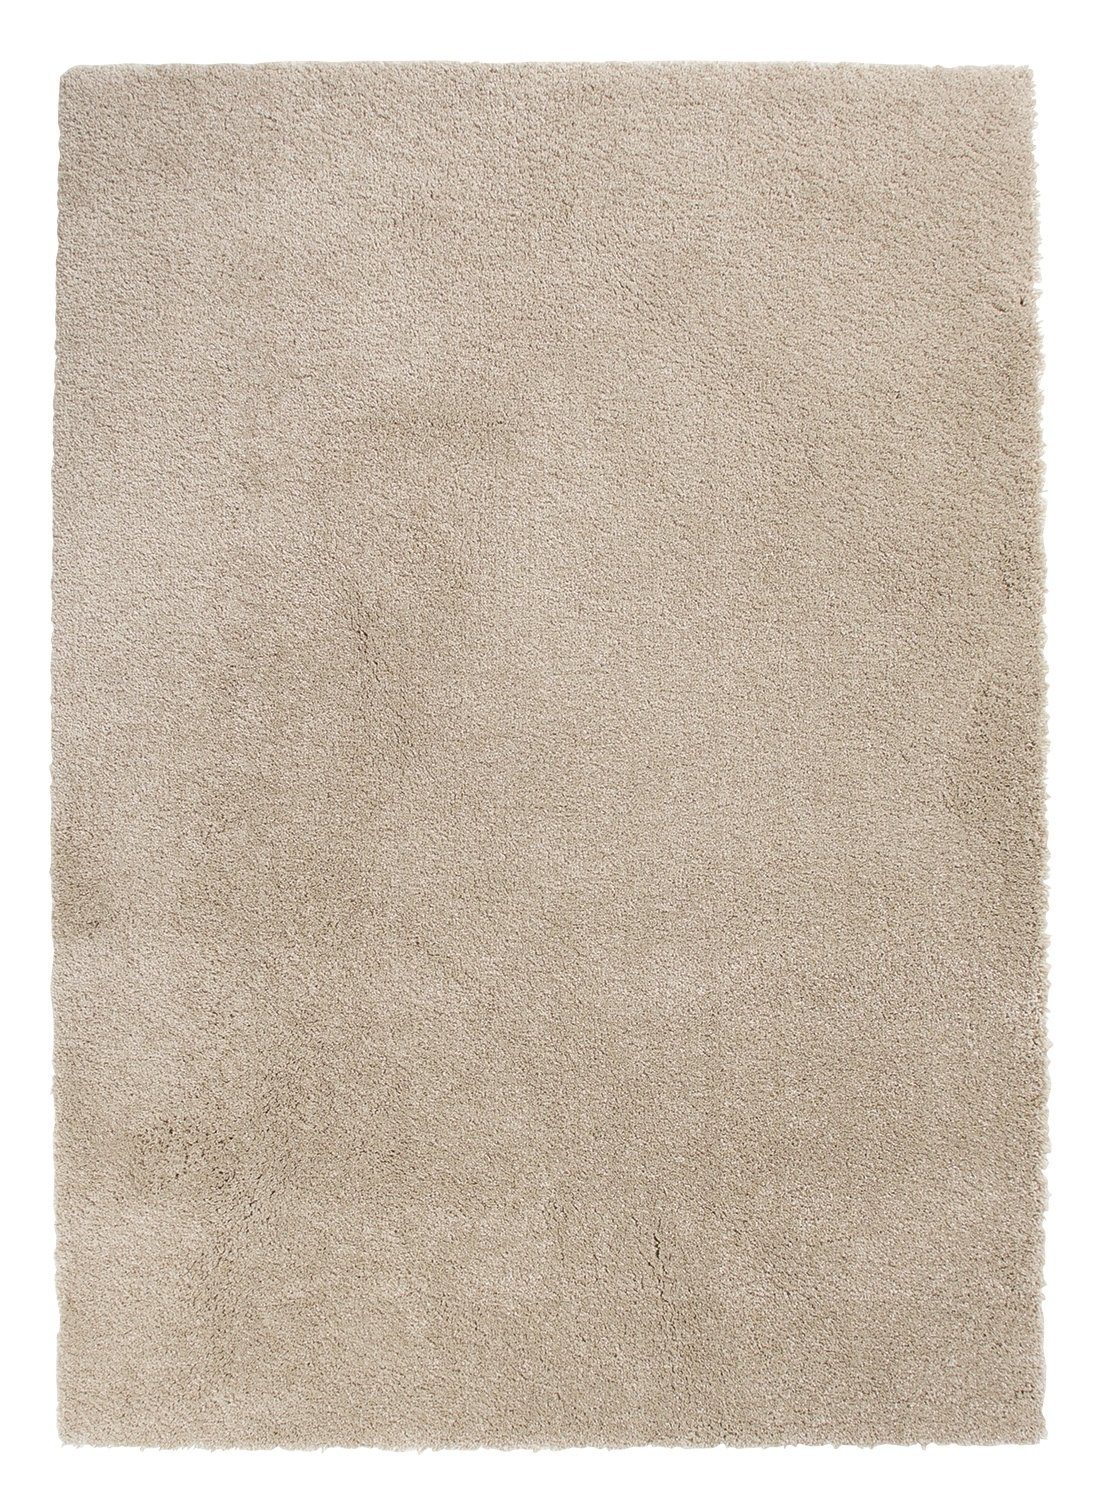 Teppich DELIGHT COSY, Polypropylen, Beige, 60 x 115 cm, Balta Rugs, rechteckig, Höhe: 22 mm